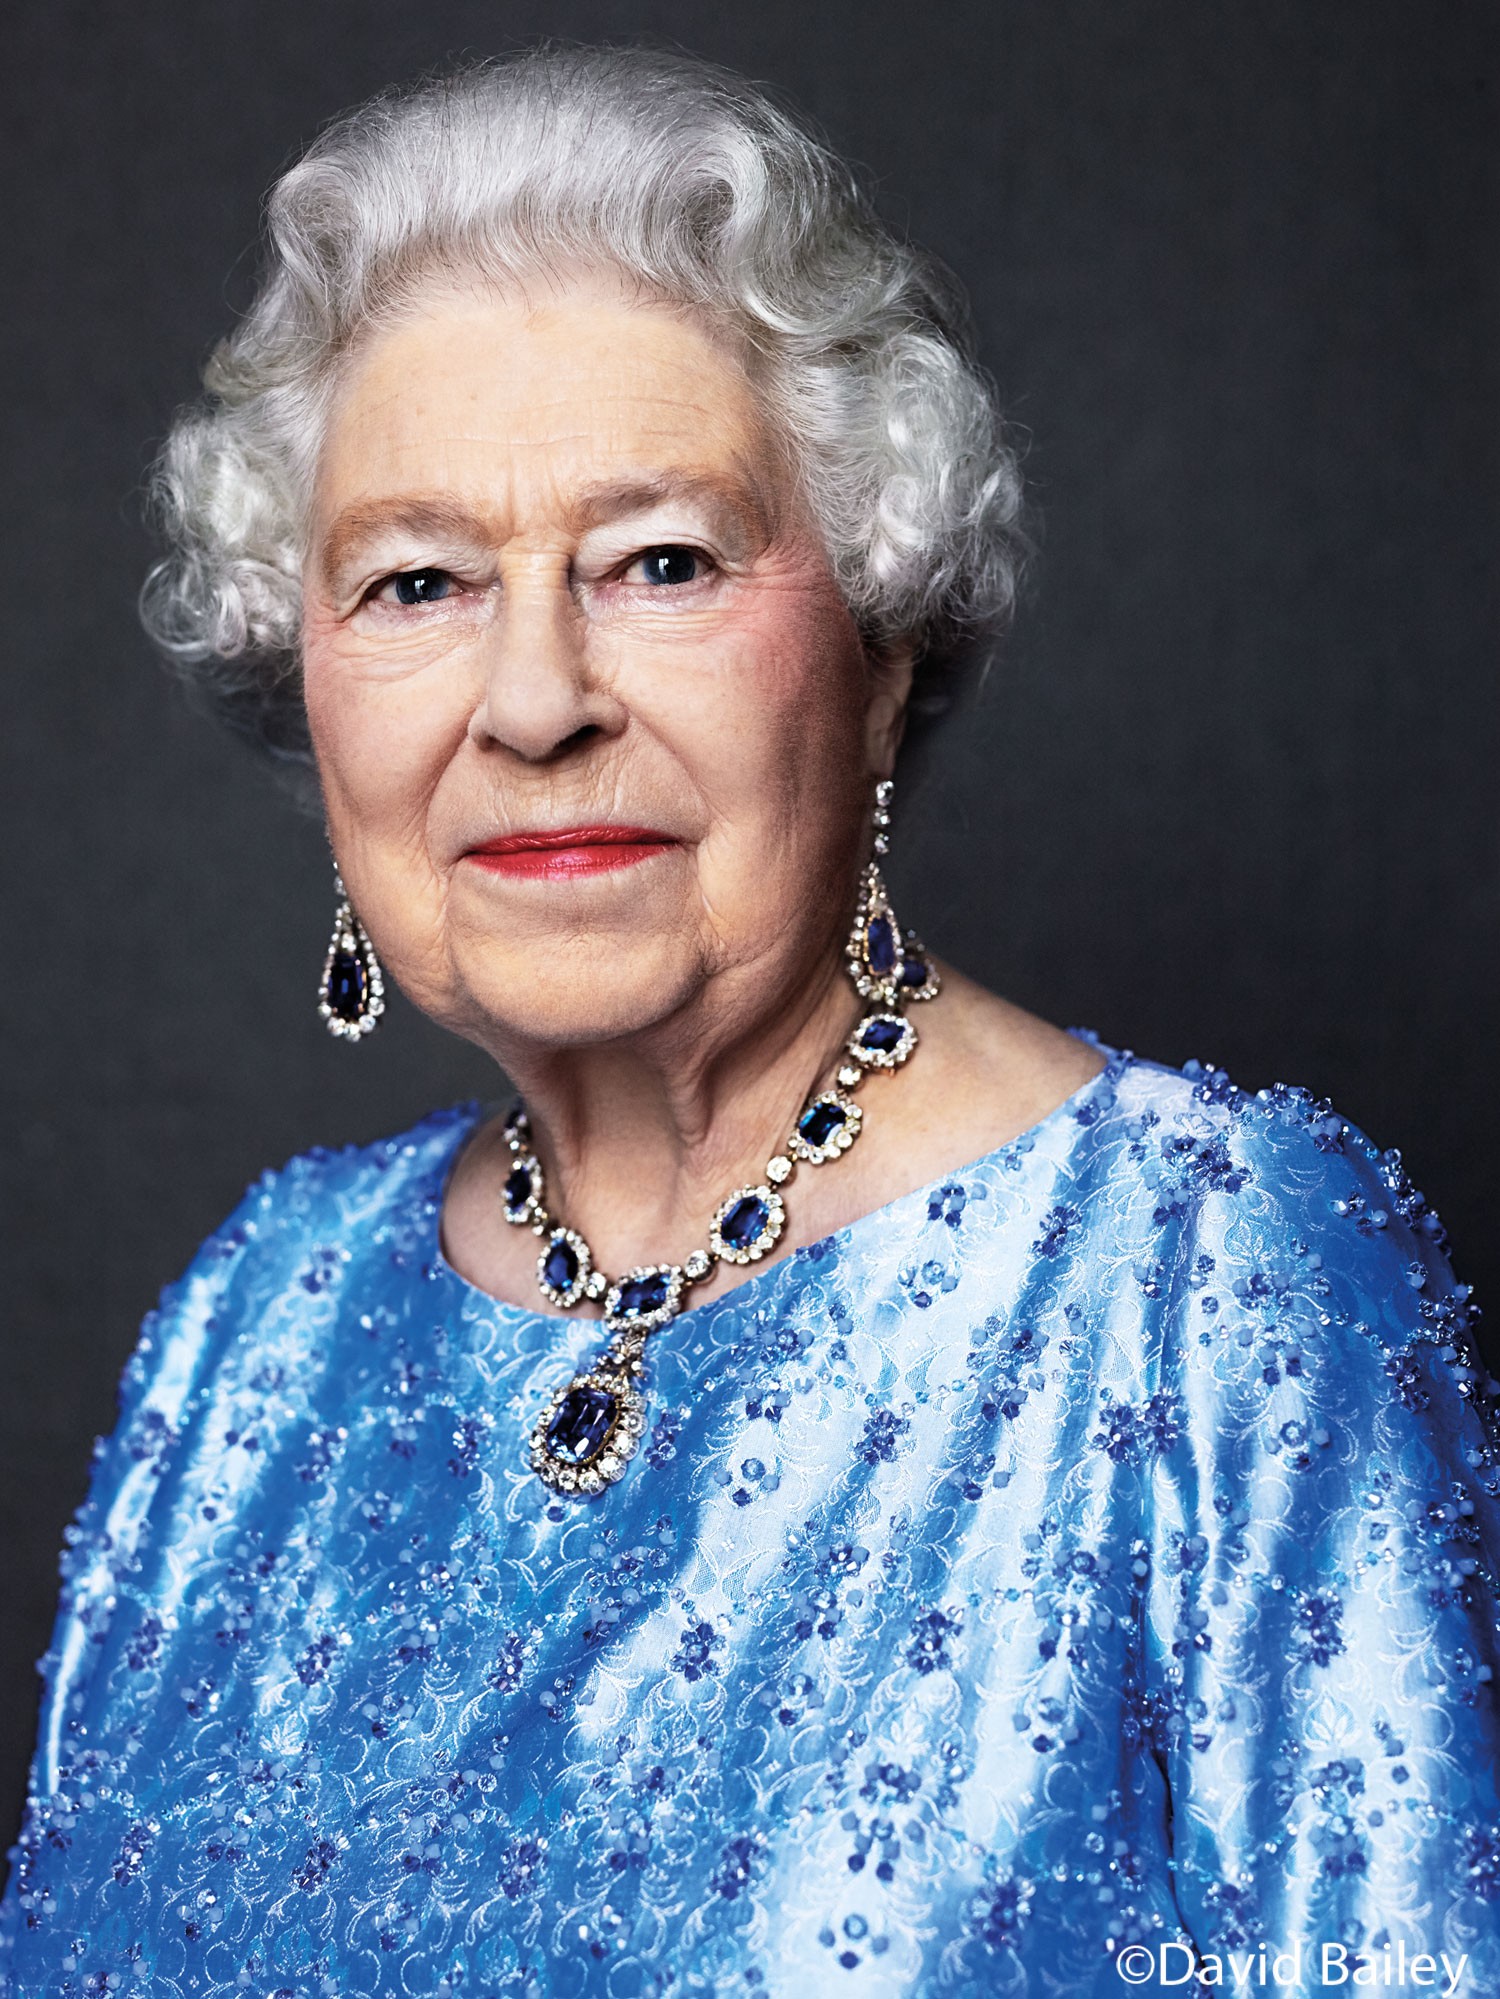 Elizabeth II em foto comemorativa do Jubileu de Safira (Foto: The Royal Household)